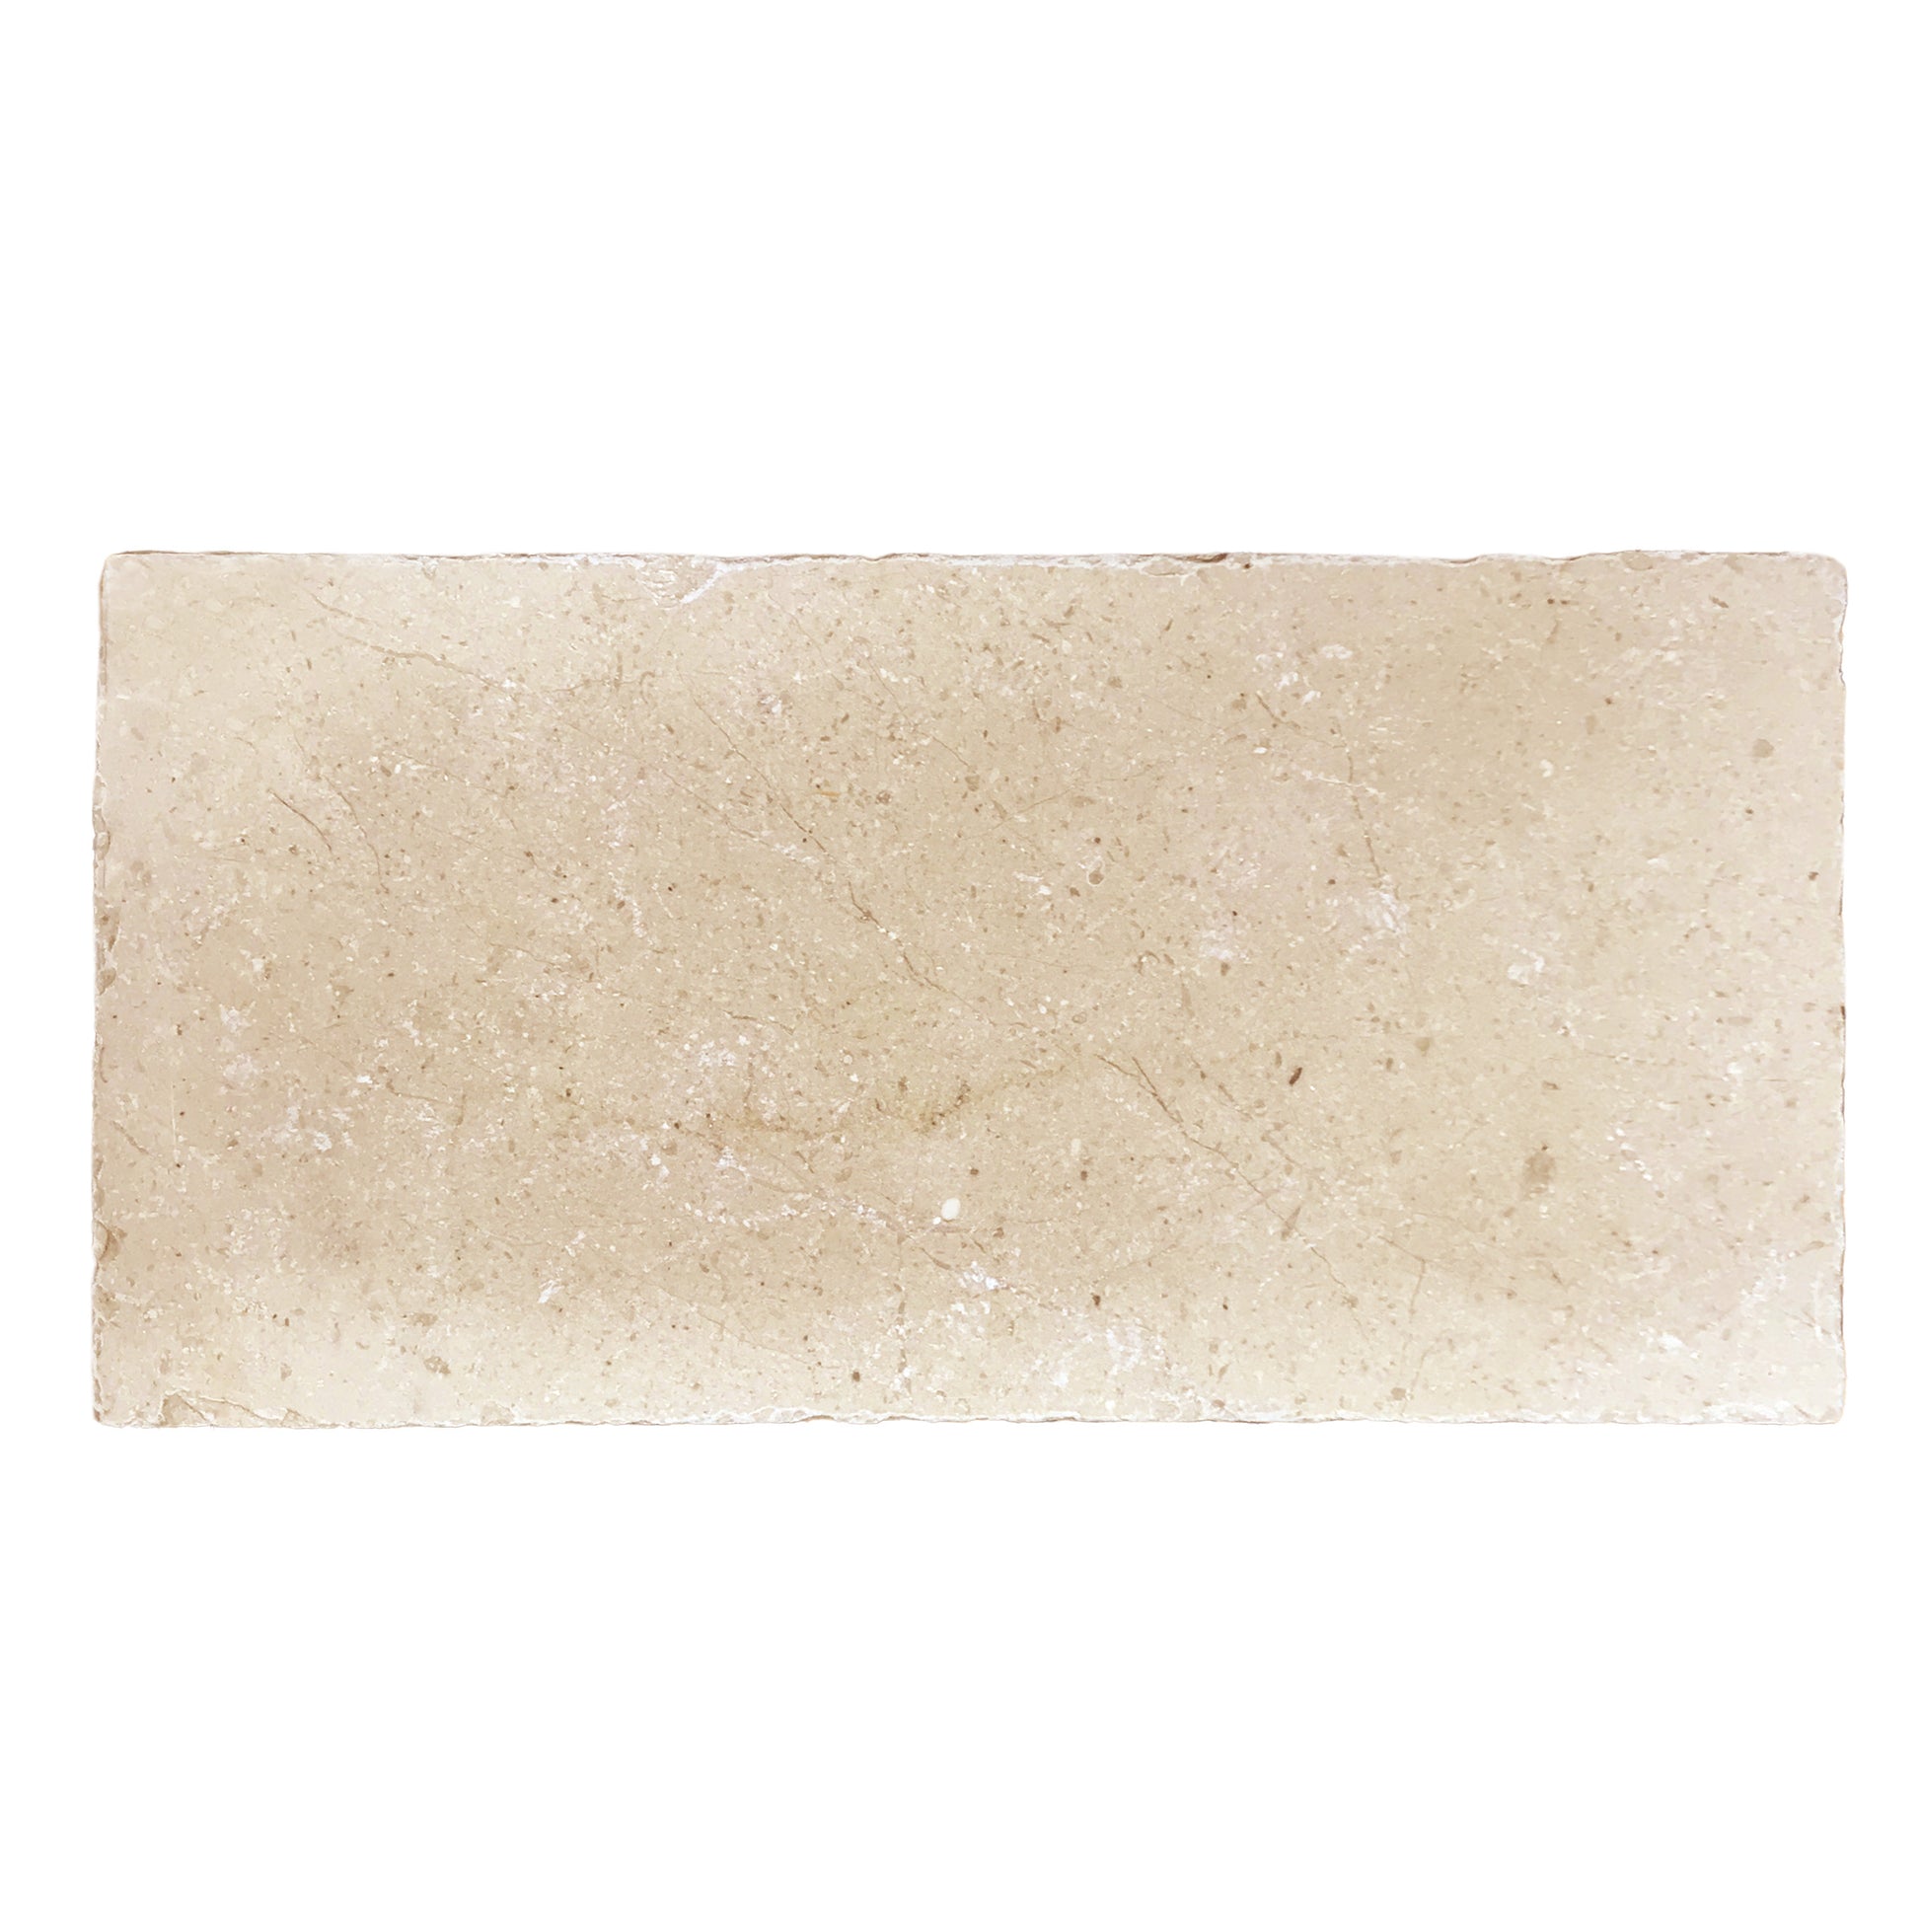 A large rectangular cream marble tile.